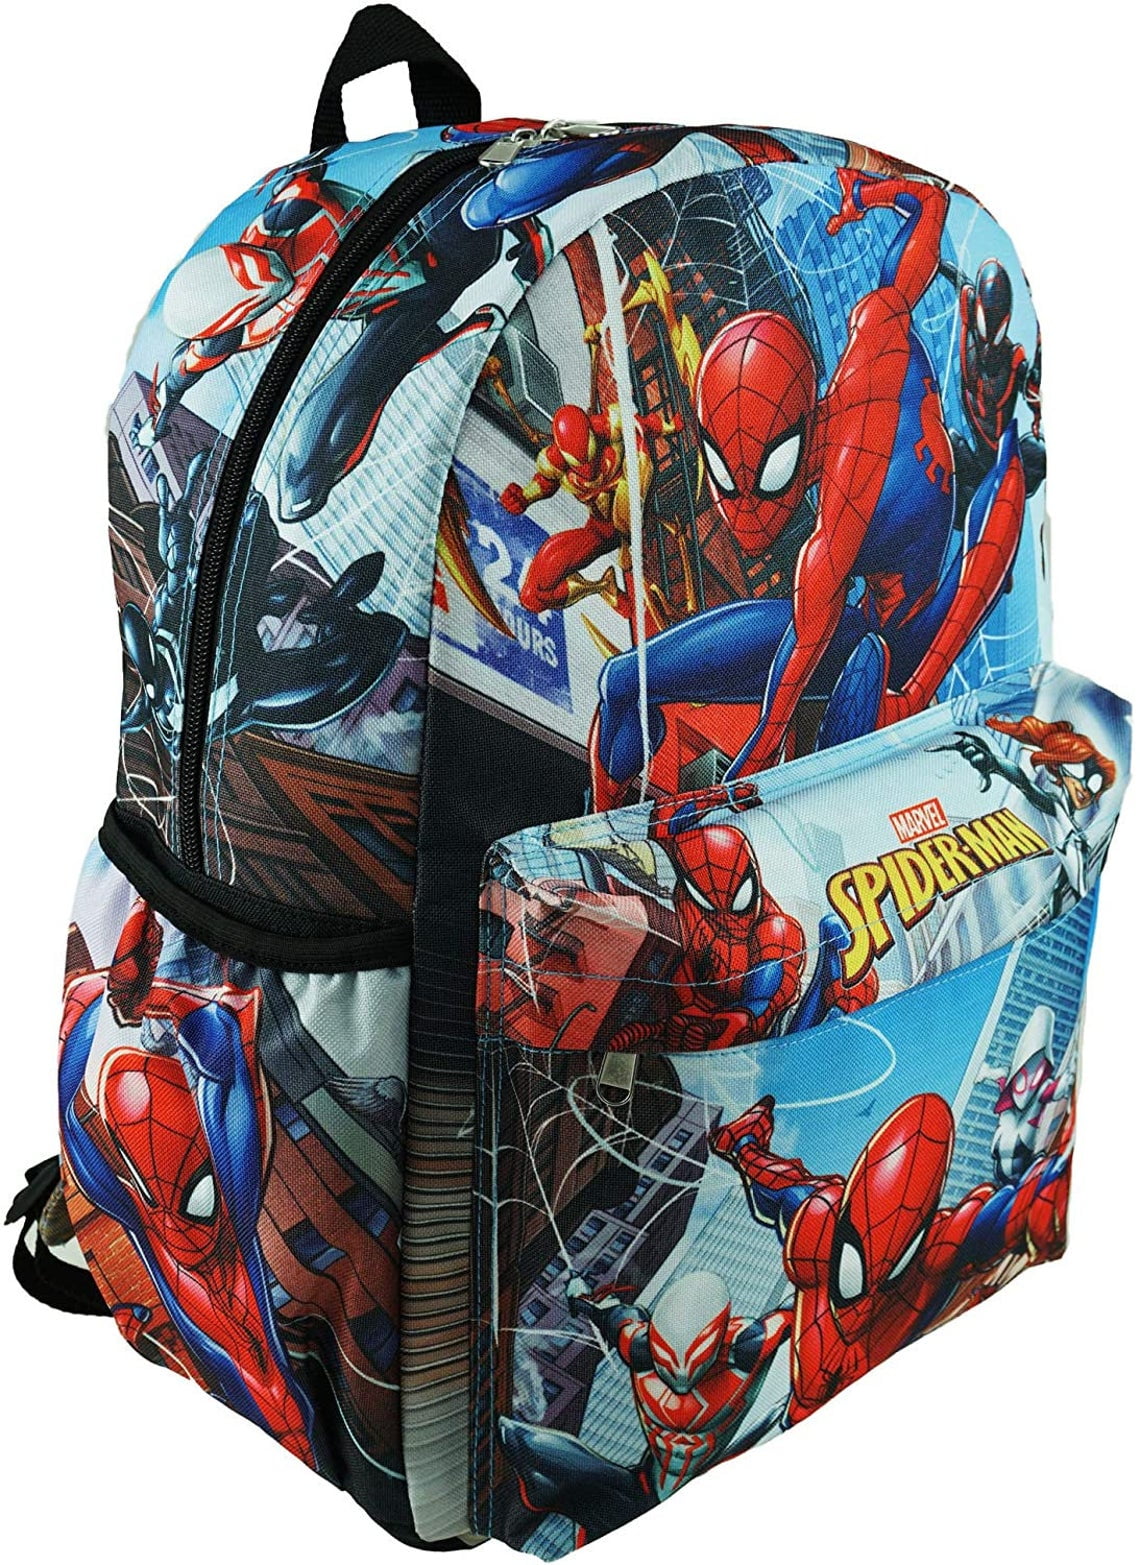 Spiderman Rolling Backpack